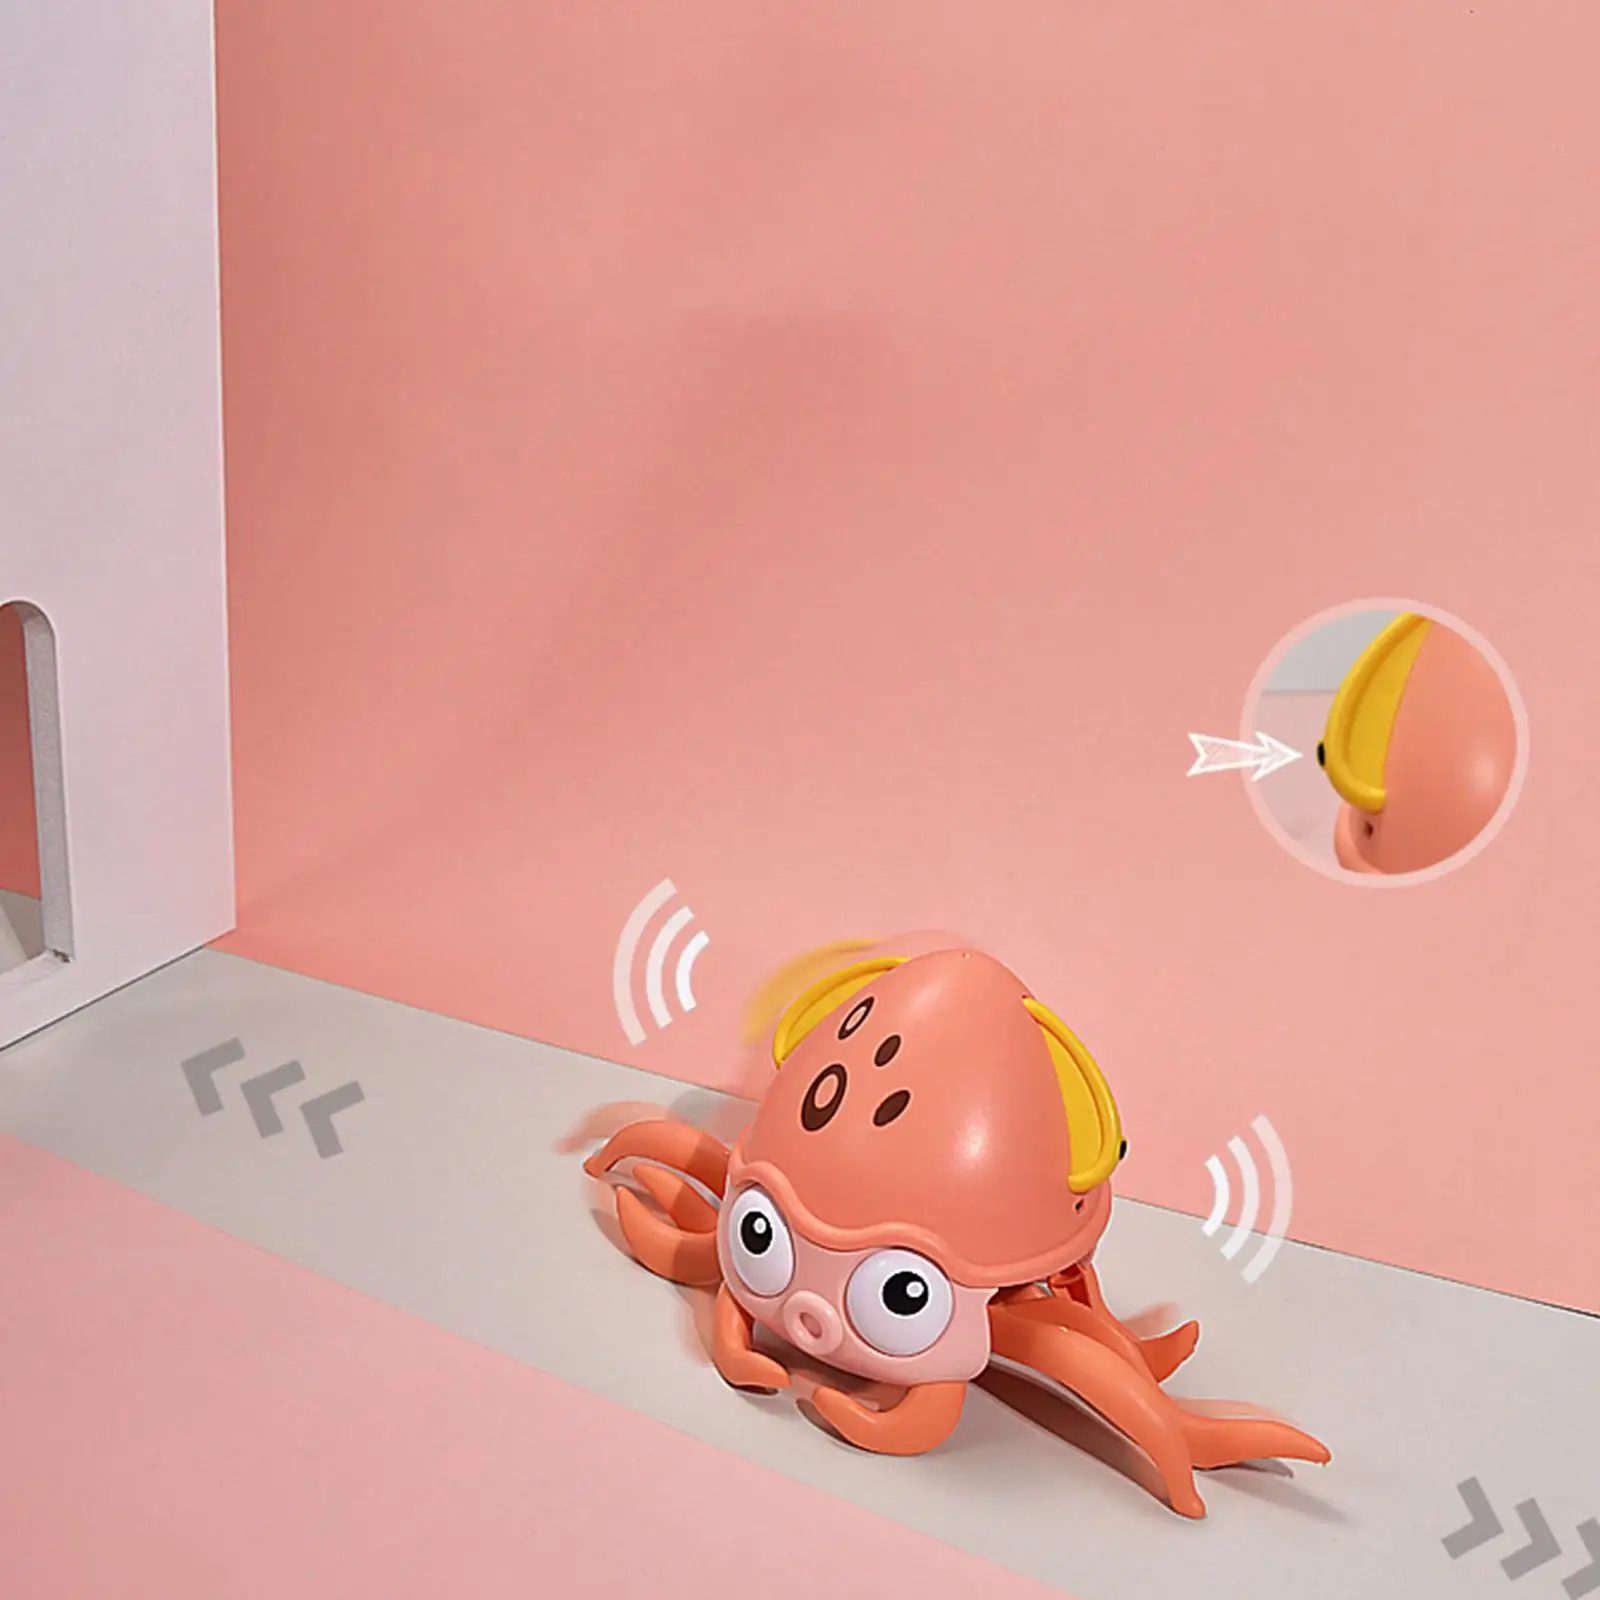  Electric Octopus Toy with LED Light up Crawling Walking Animals Toys Orange